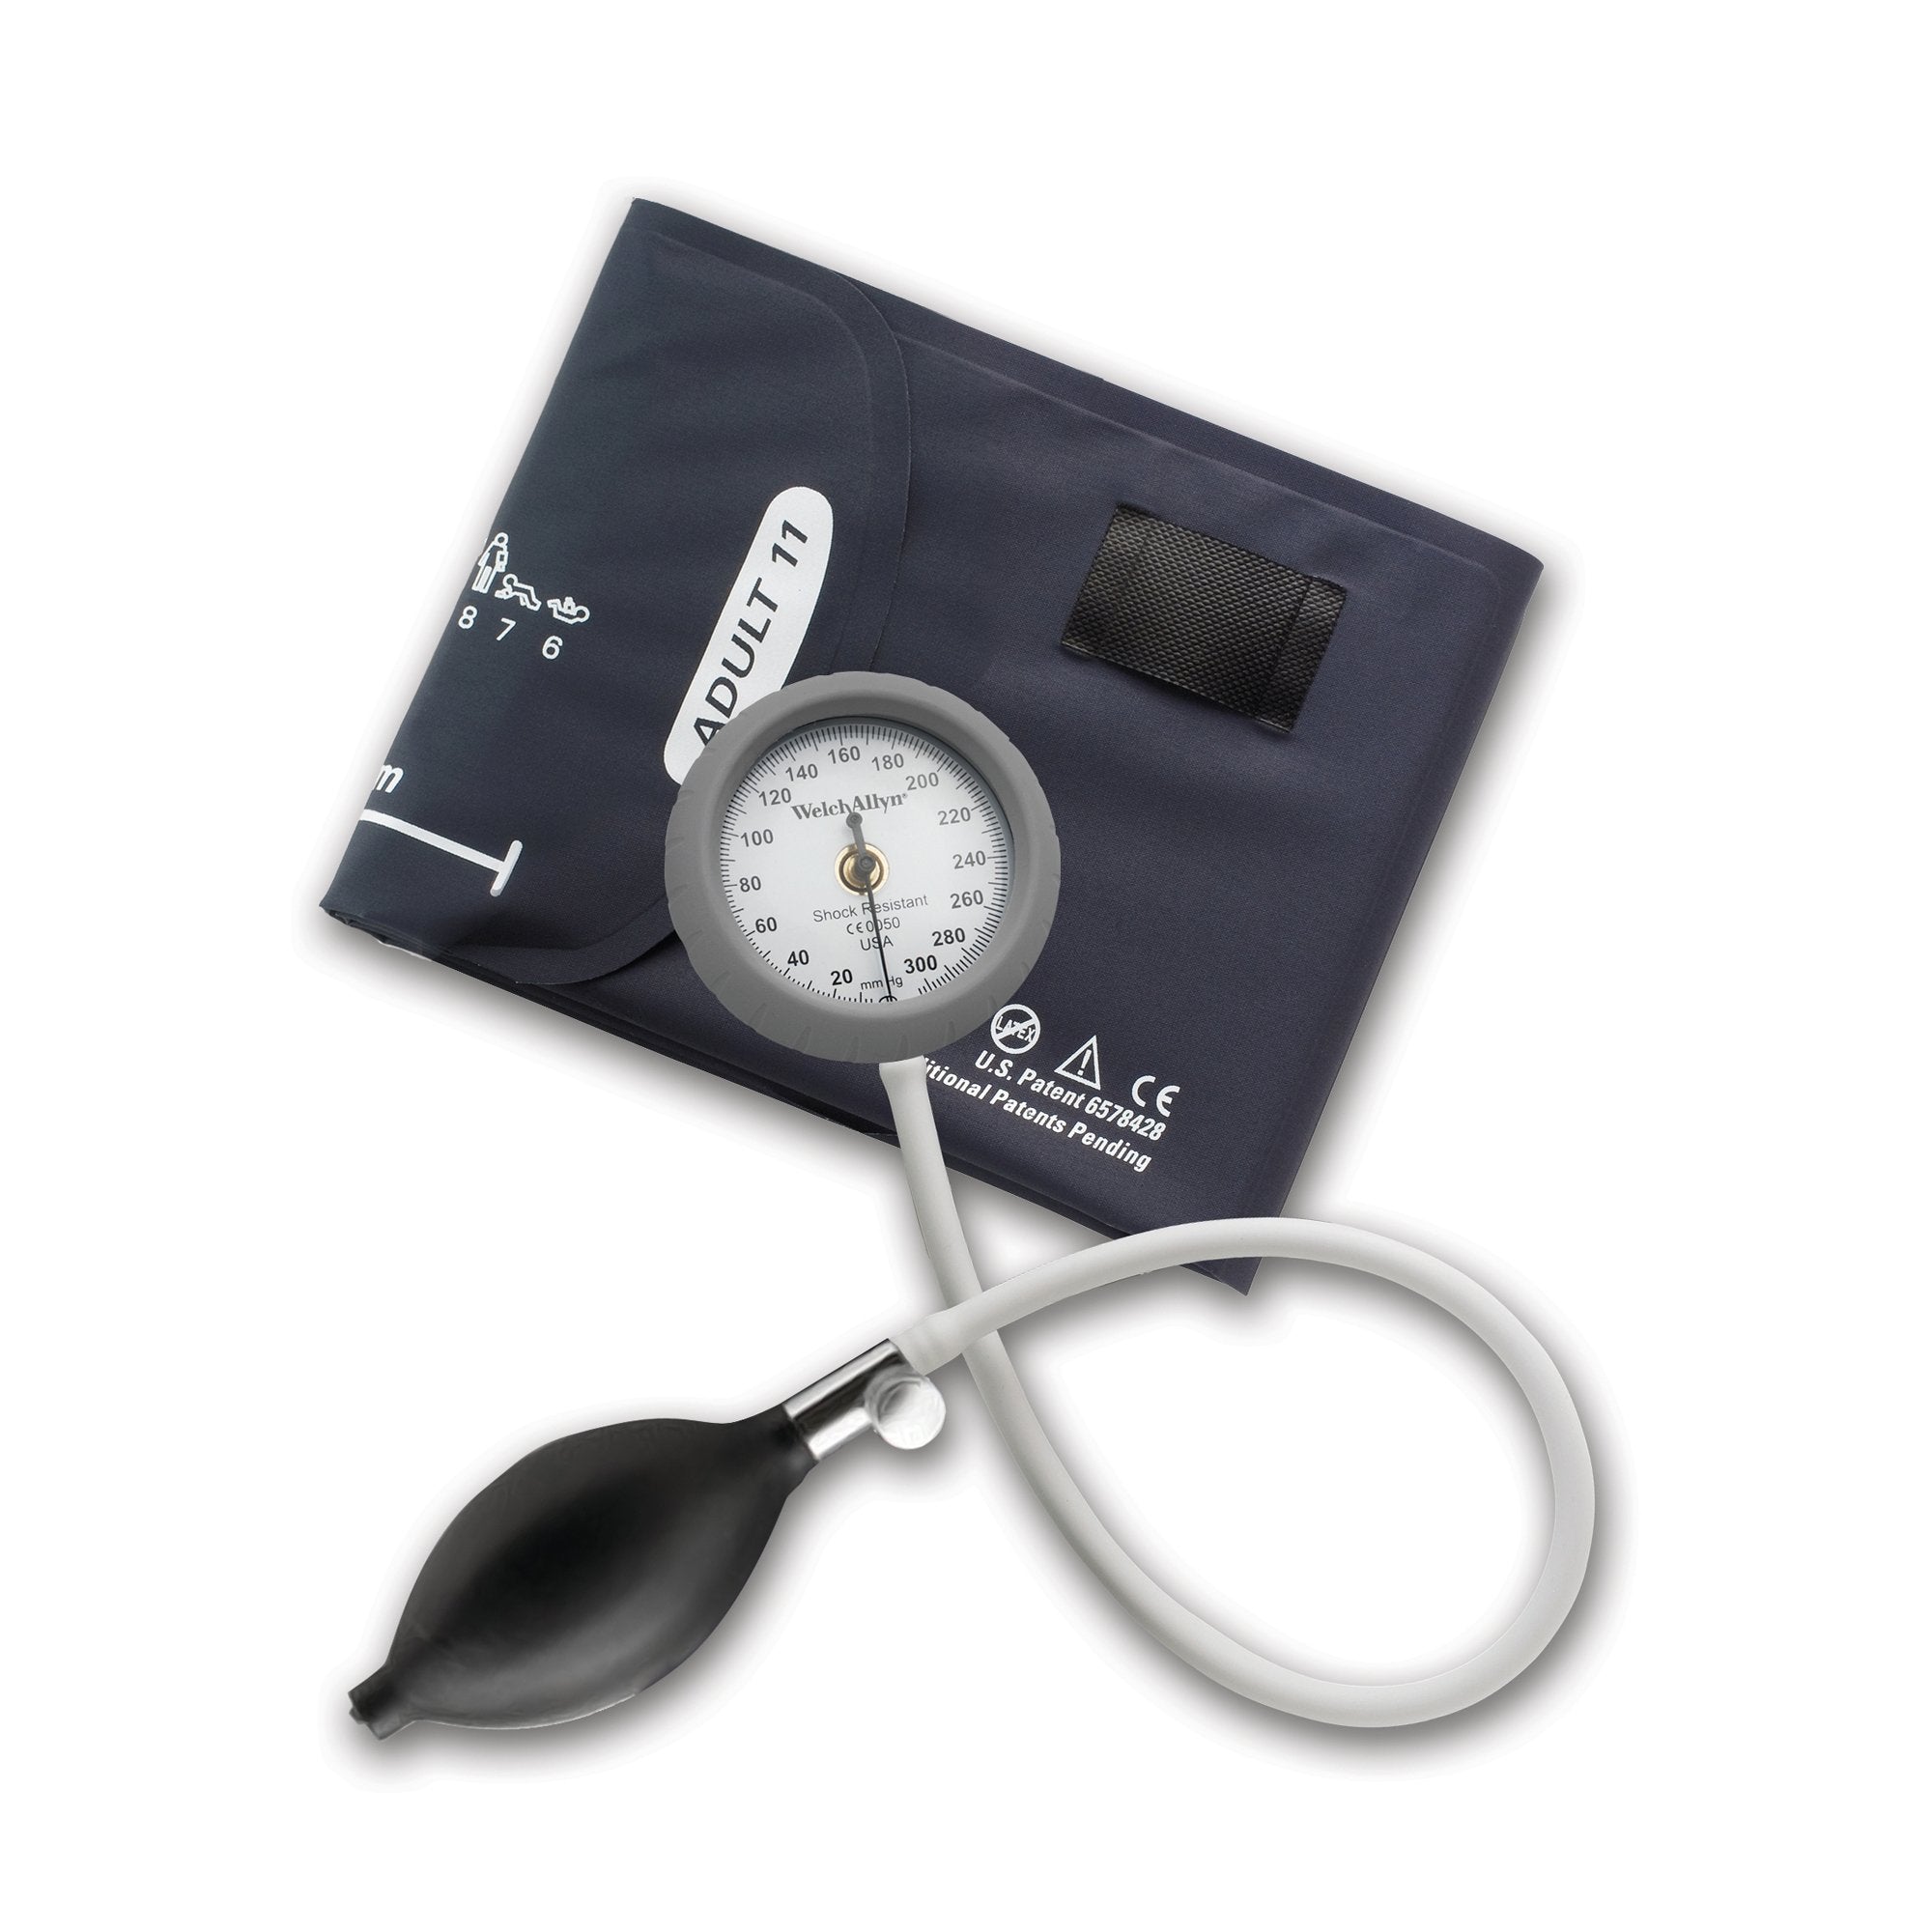 Welch Allyn DuraShock® Aneroid Sphygmomanometer Unit for Adults - Pocket Size, Vinyl Cuff - 23-40 cm